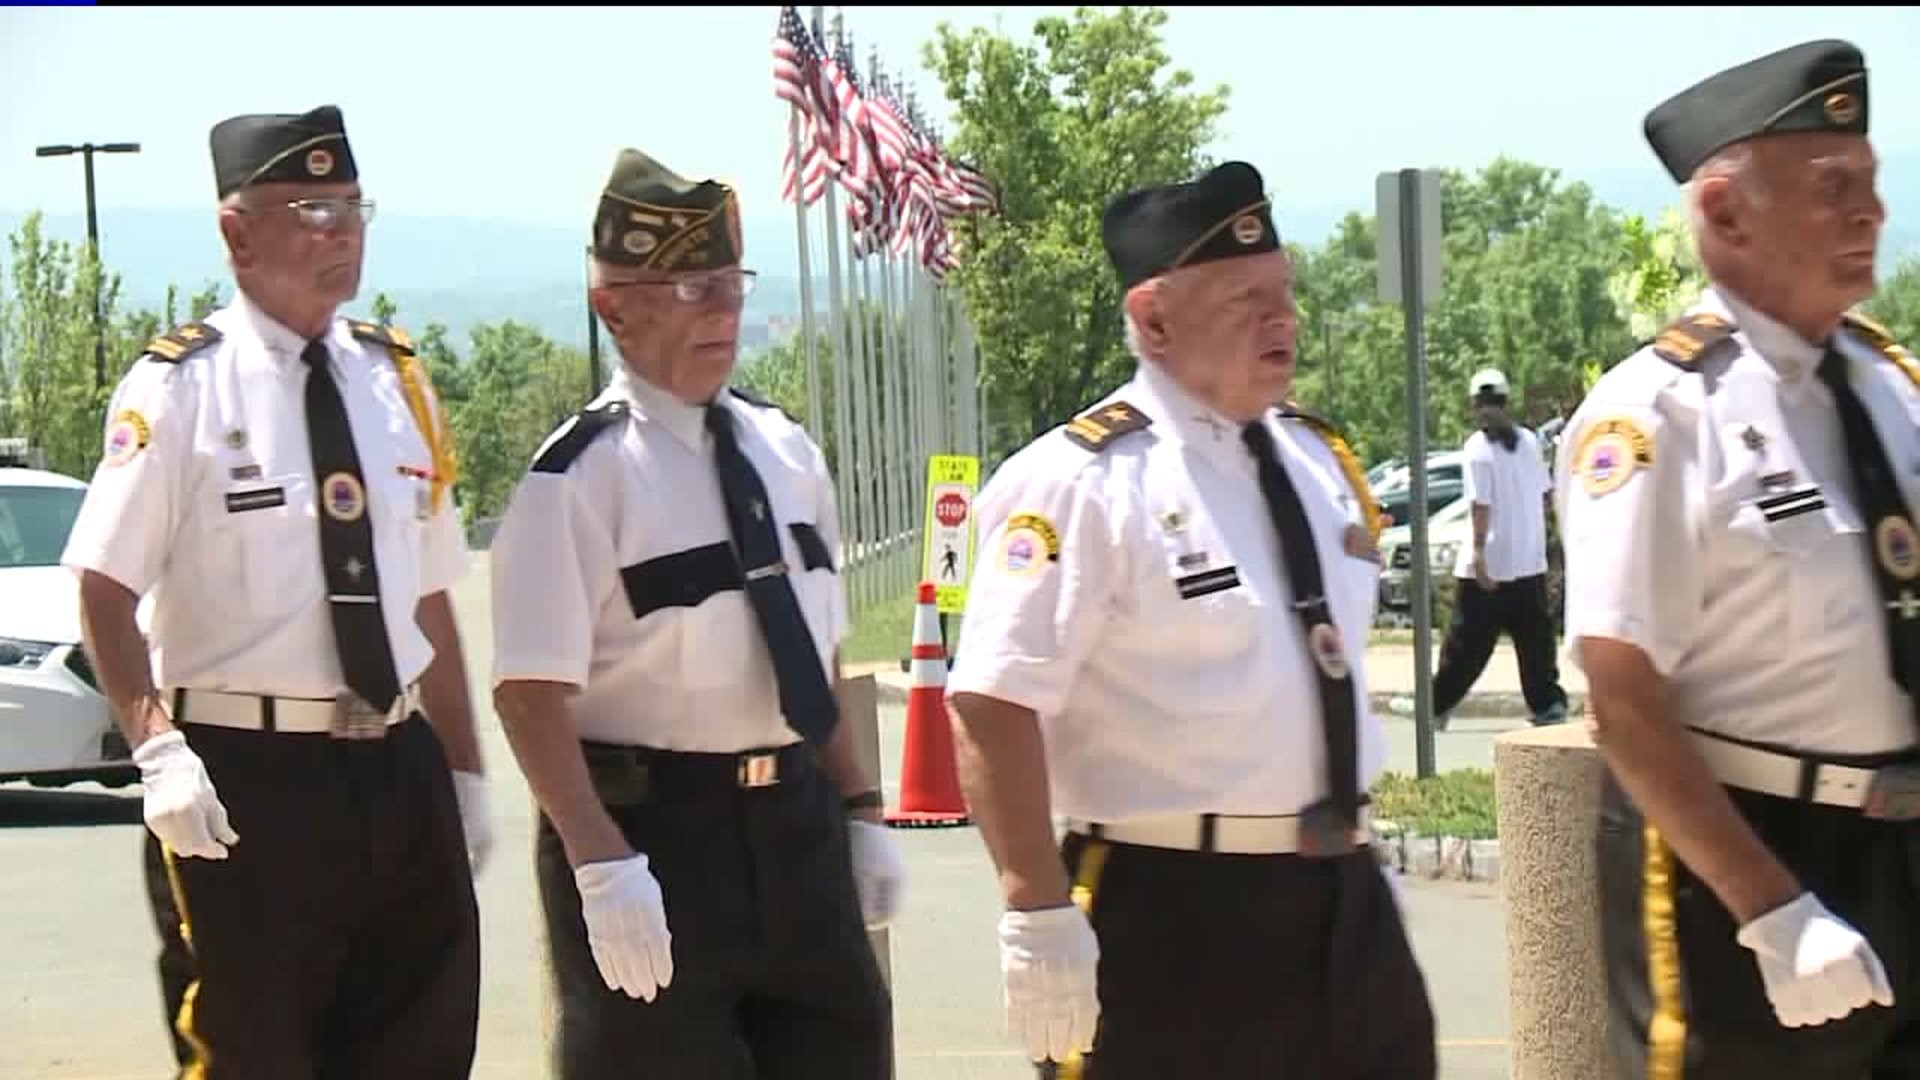 Memorial Day Ceremony at VA Hospital Near Wilkes-Barre